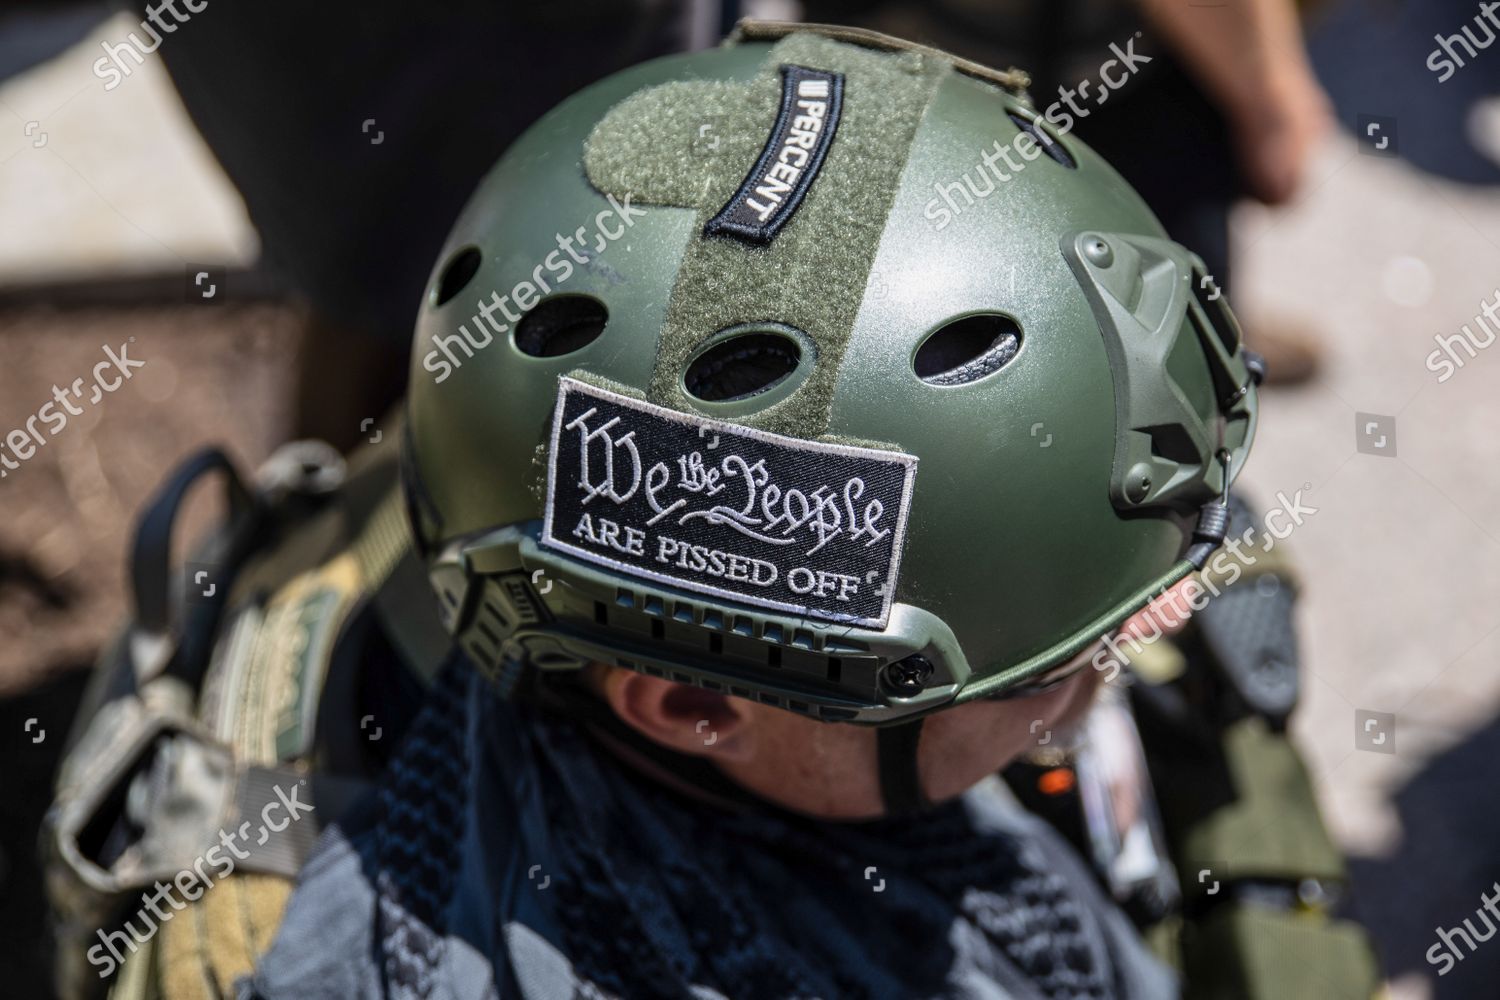 restjes mooi Schatting protester wears patche on protective helmet written Editorial Stock Photo -  Stock Image | Shutterstock